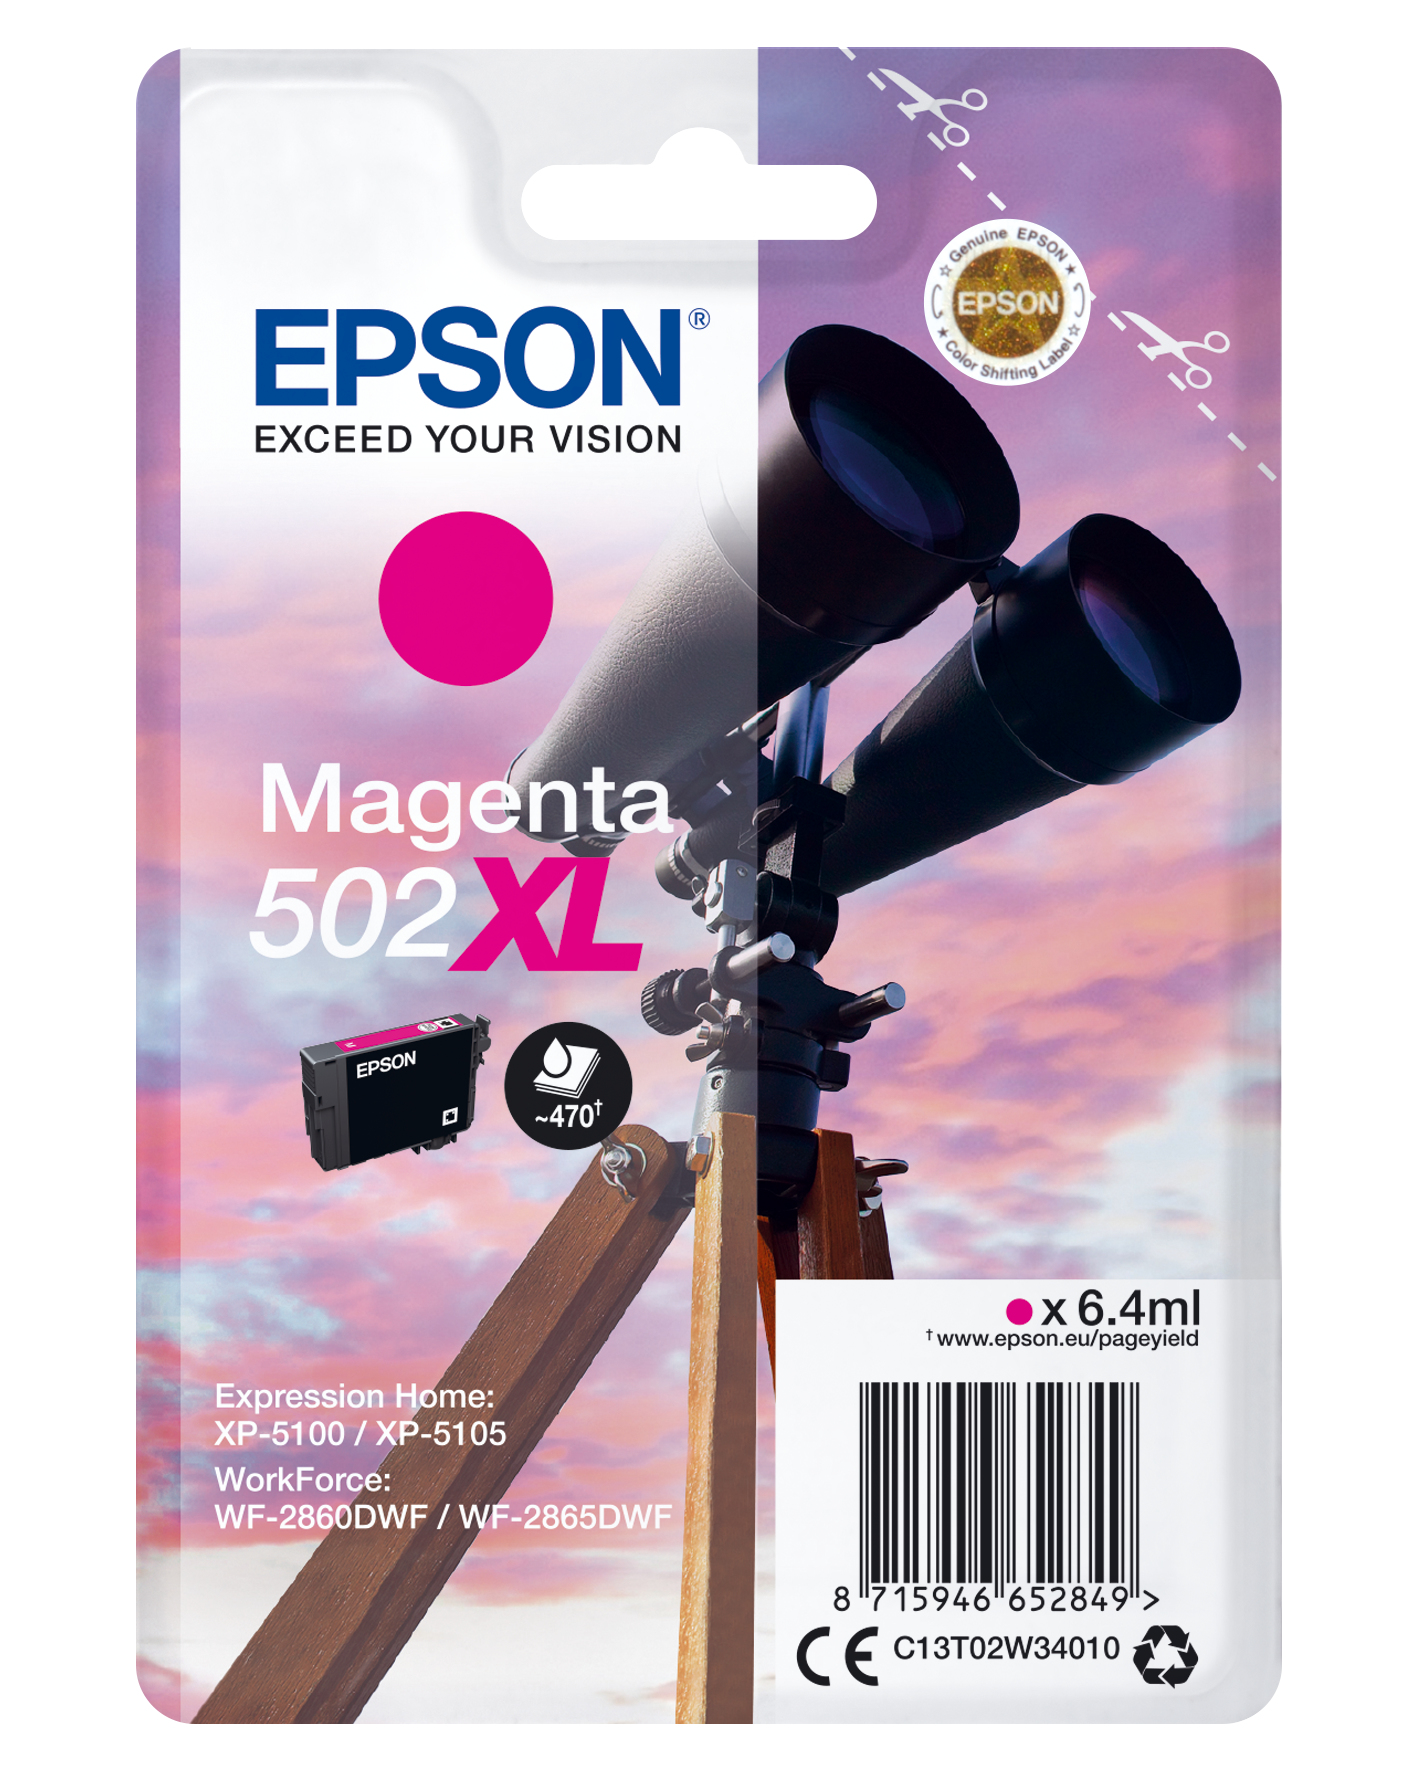 Binoculars Singlepack Magentaxl Epson Consumer Ink S1 C13t02w34010 8715946652849